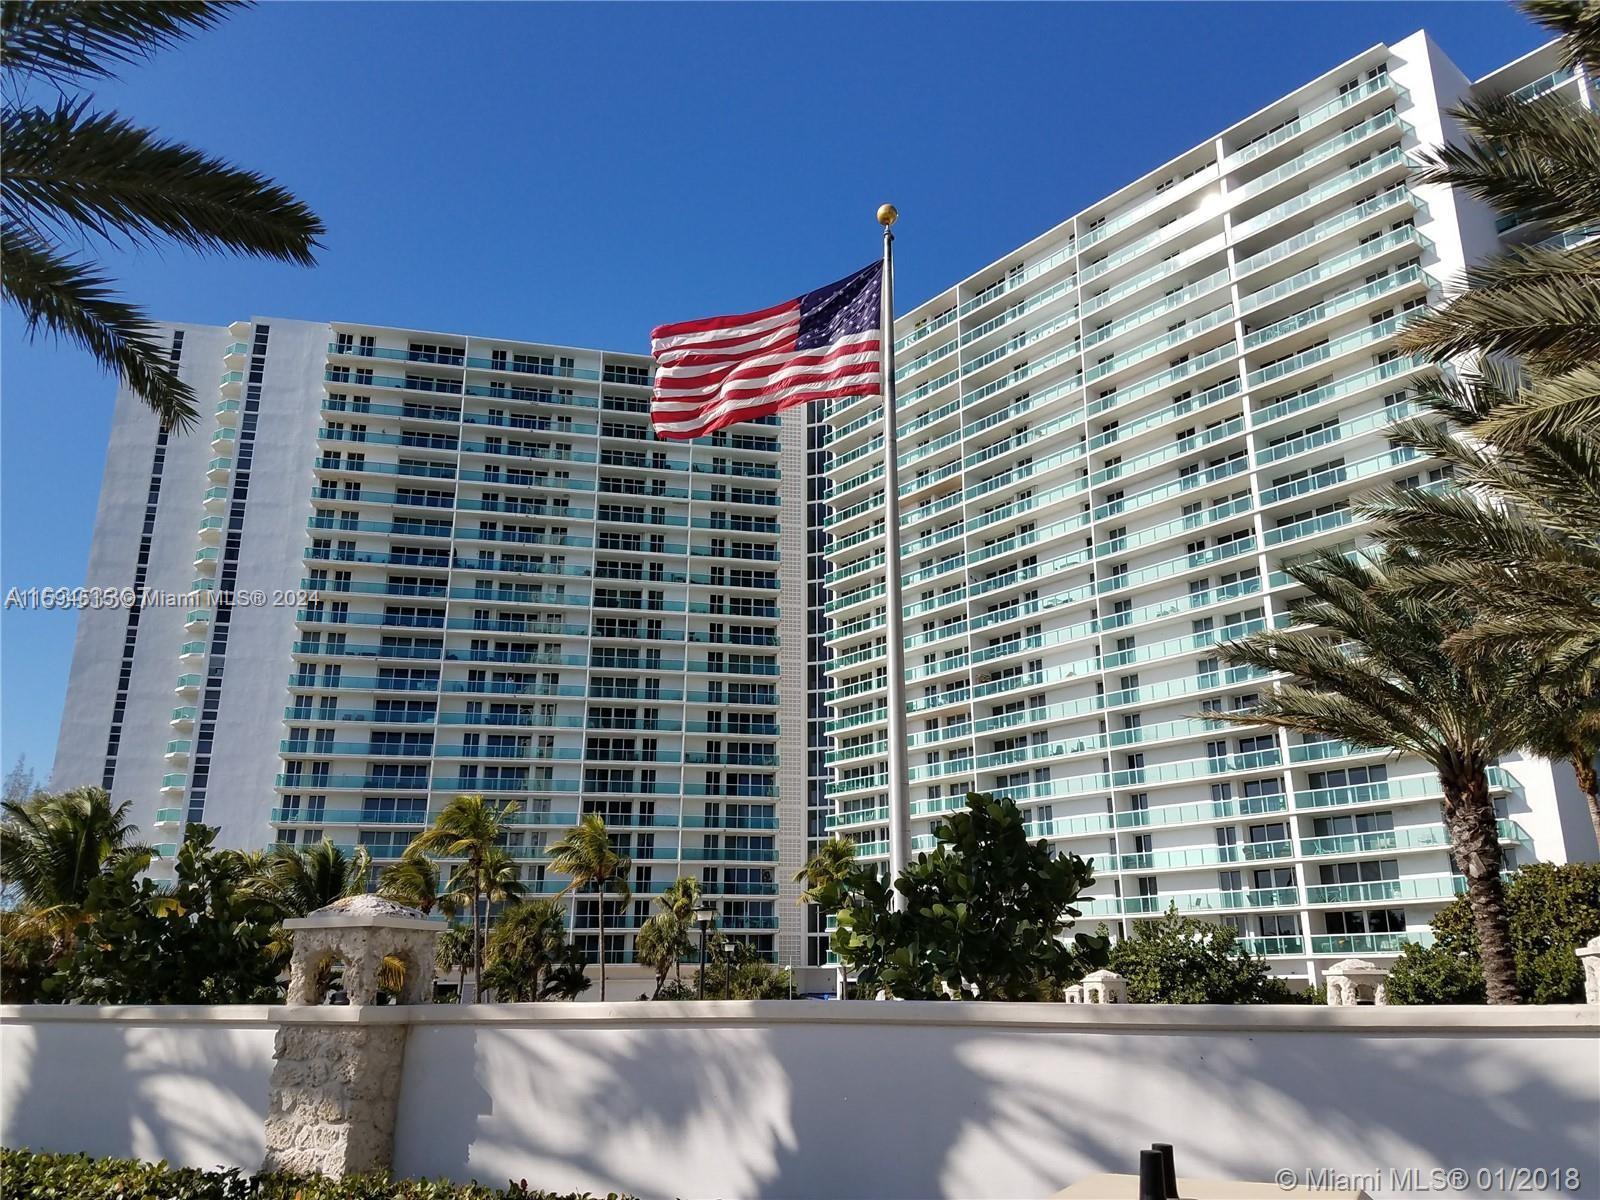 Rental Property at 100 Bayview Dr 1428, Sunny Isles Beach, Miami-Dade County, Florida - Bedrooms: 2 
Bathrooms: 2  - $3,150 MO.